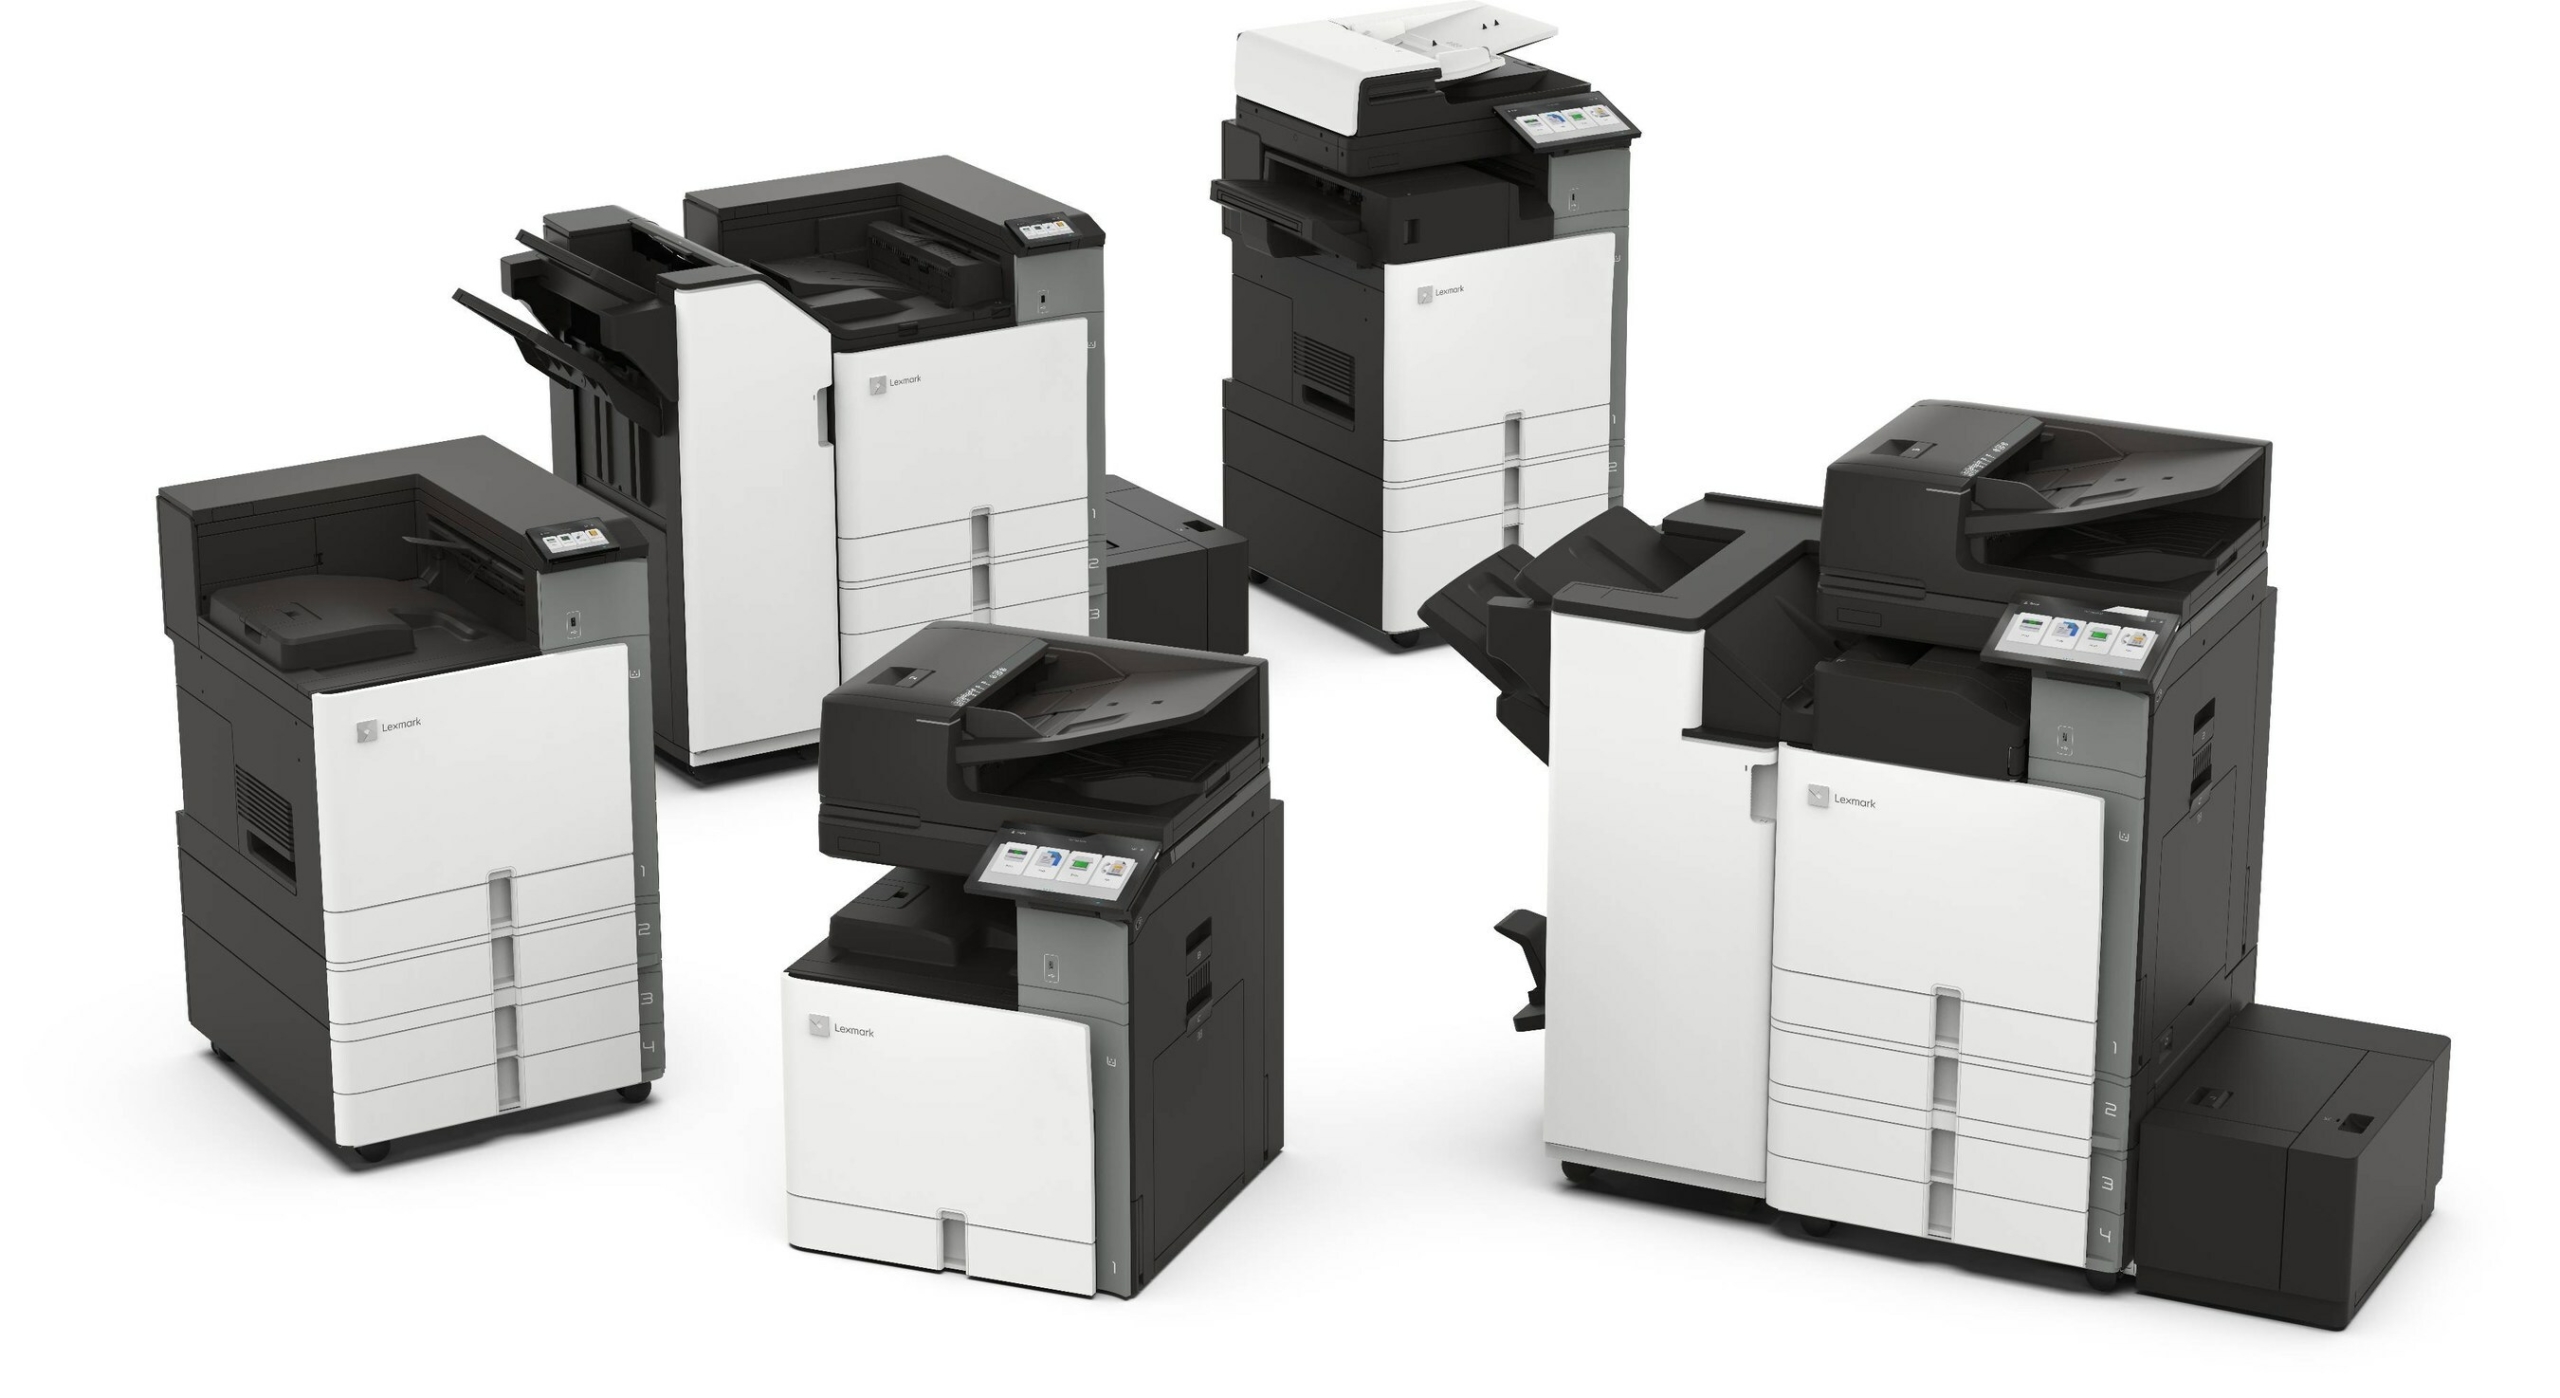 Lexmark Introduces 9-series A3 Printer